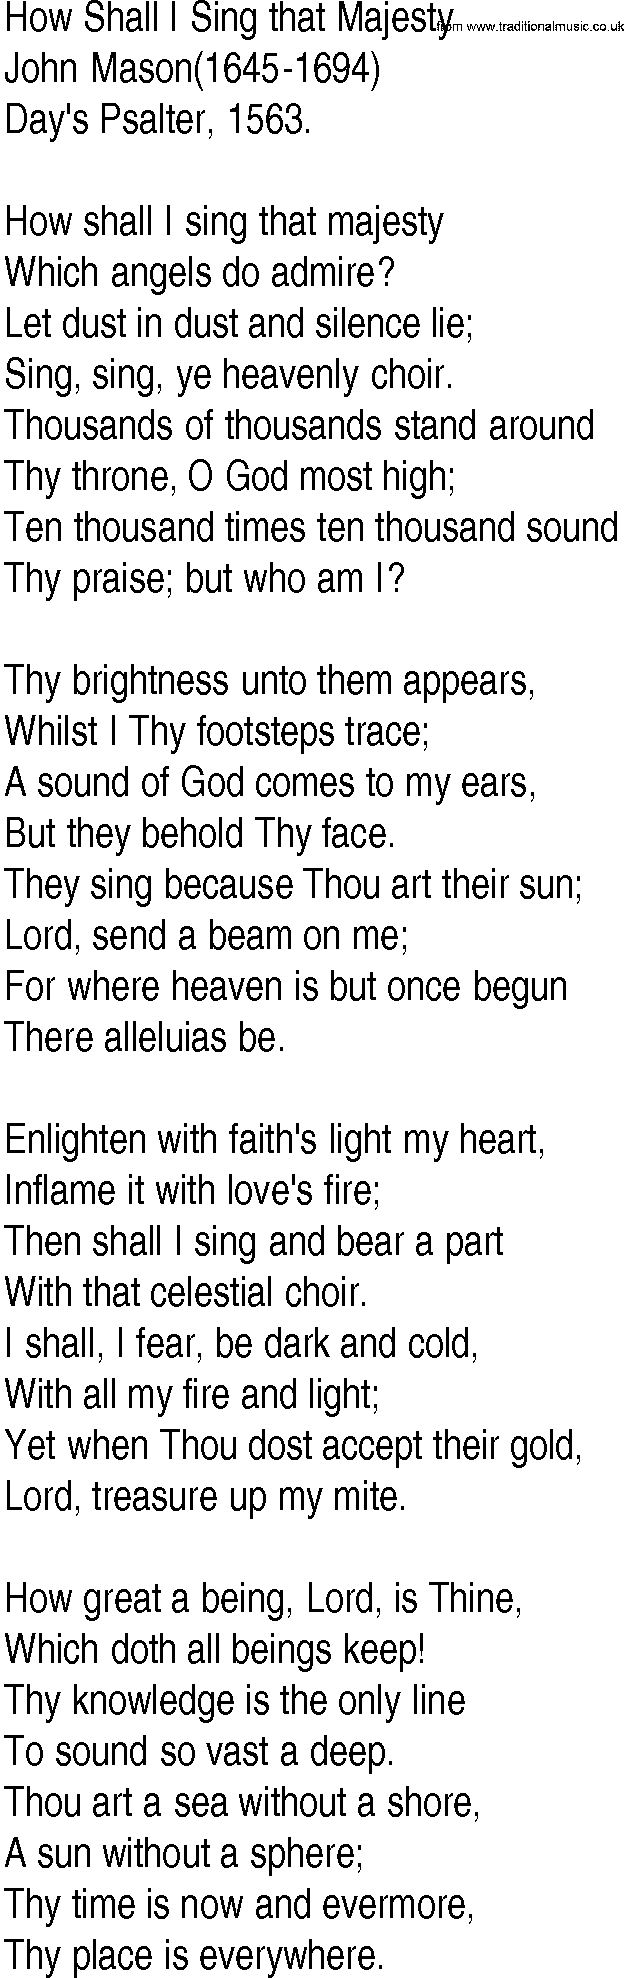 Hymn and Gospel Song: How Shall I Sing that Majesty by John Mason lyrics